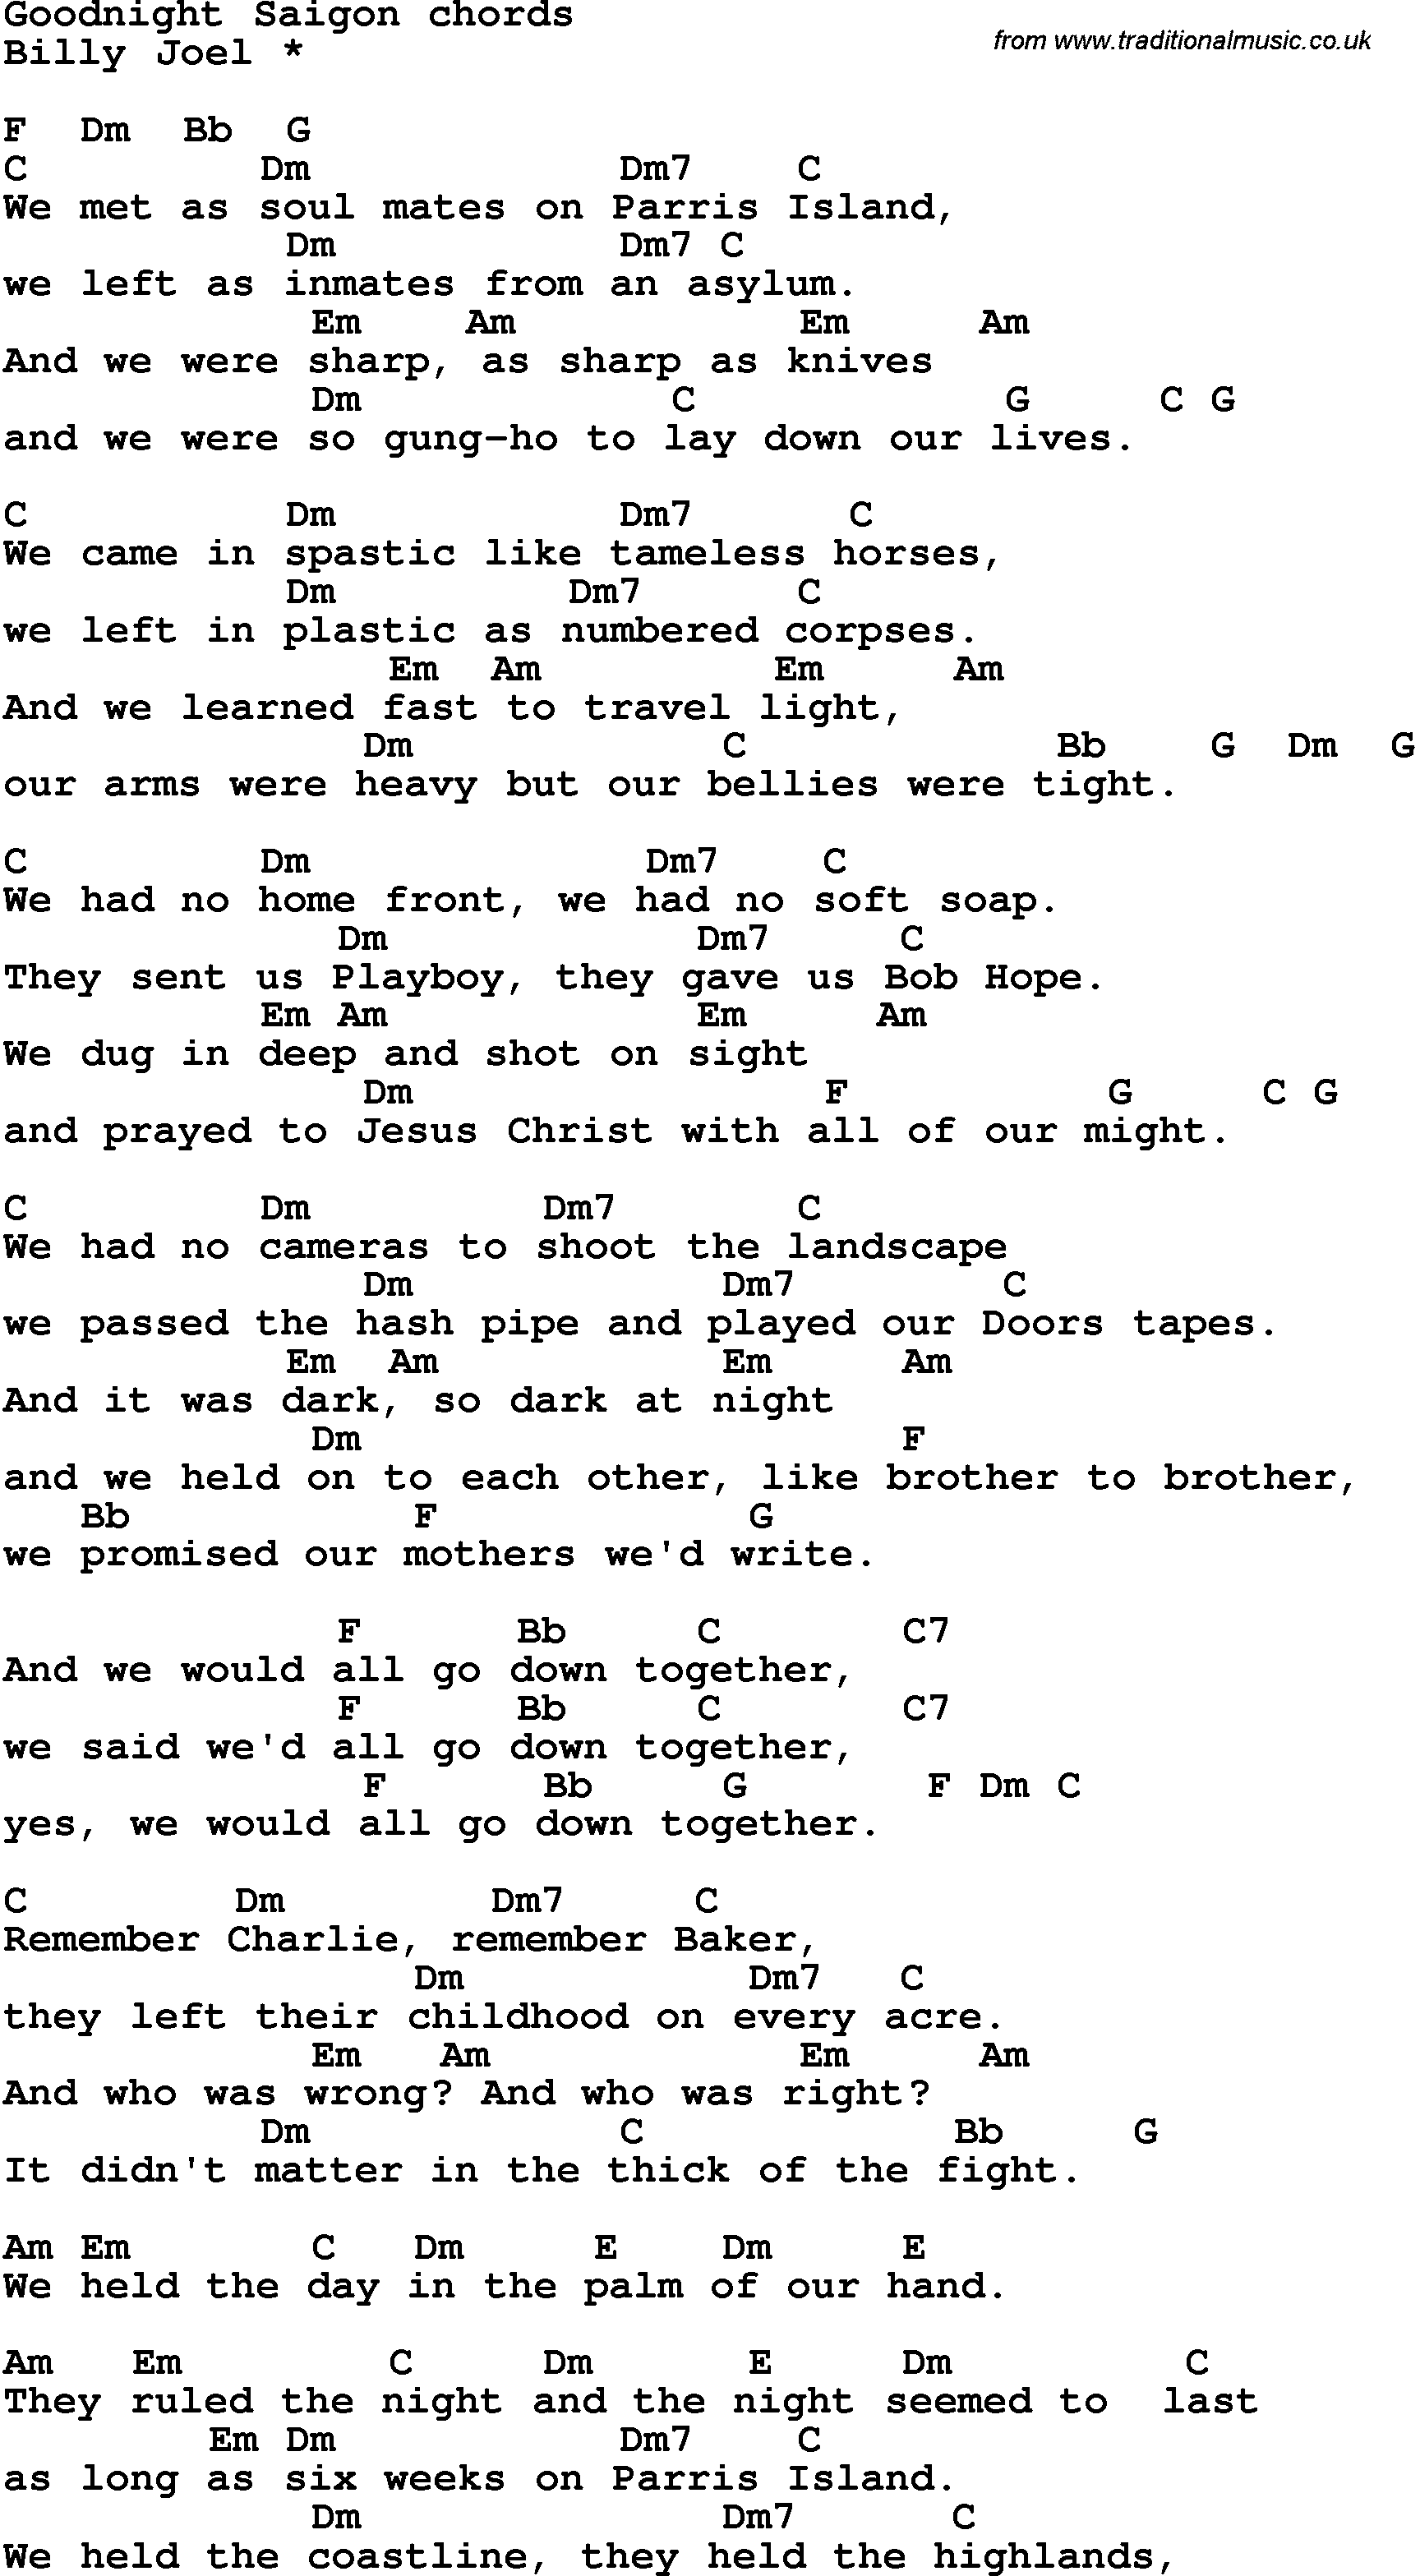 Song Lyrics with guitar chords for Goodnight Saigon